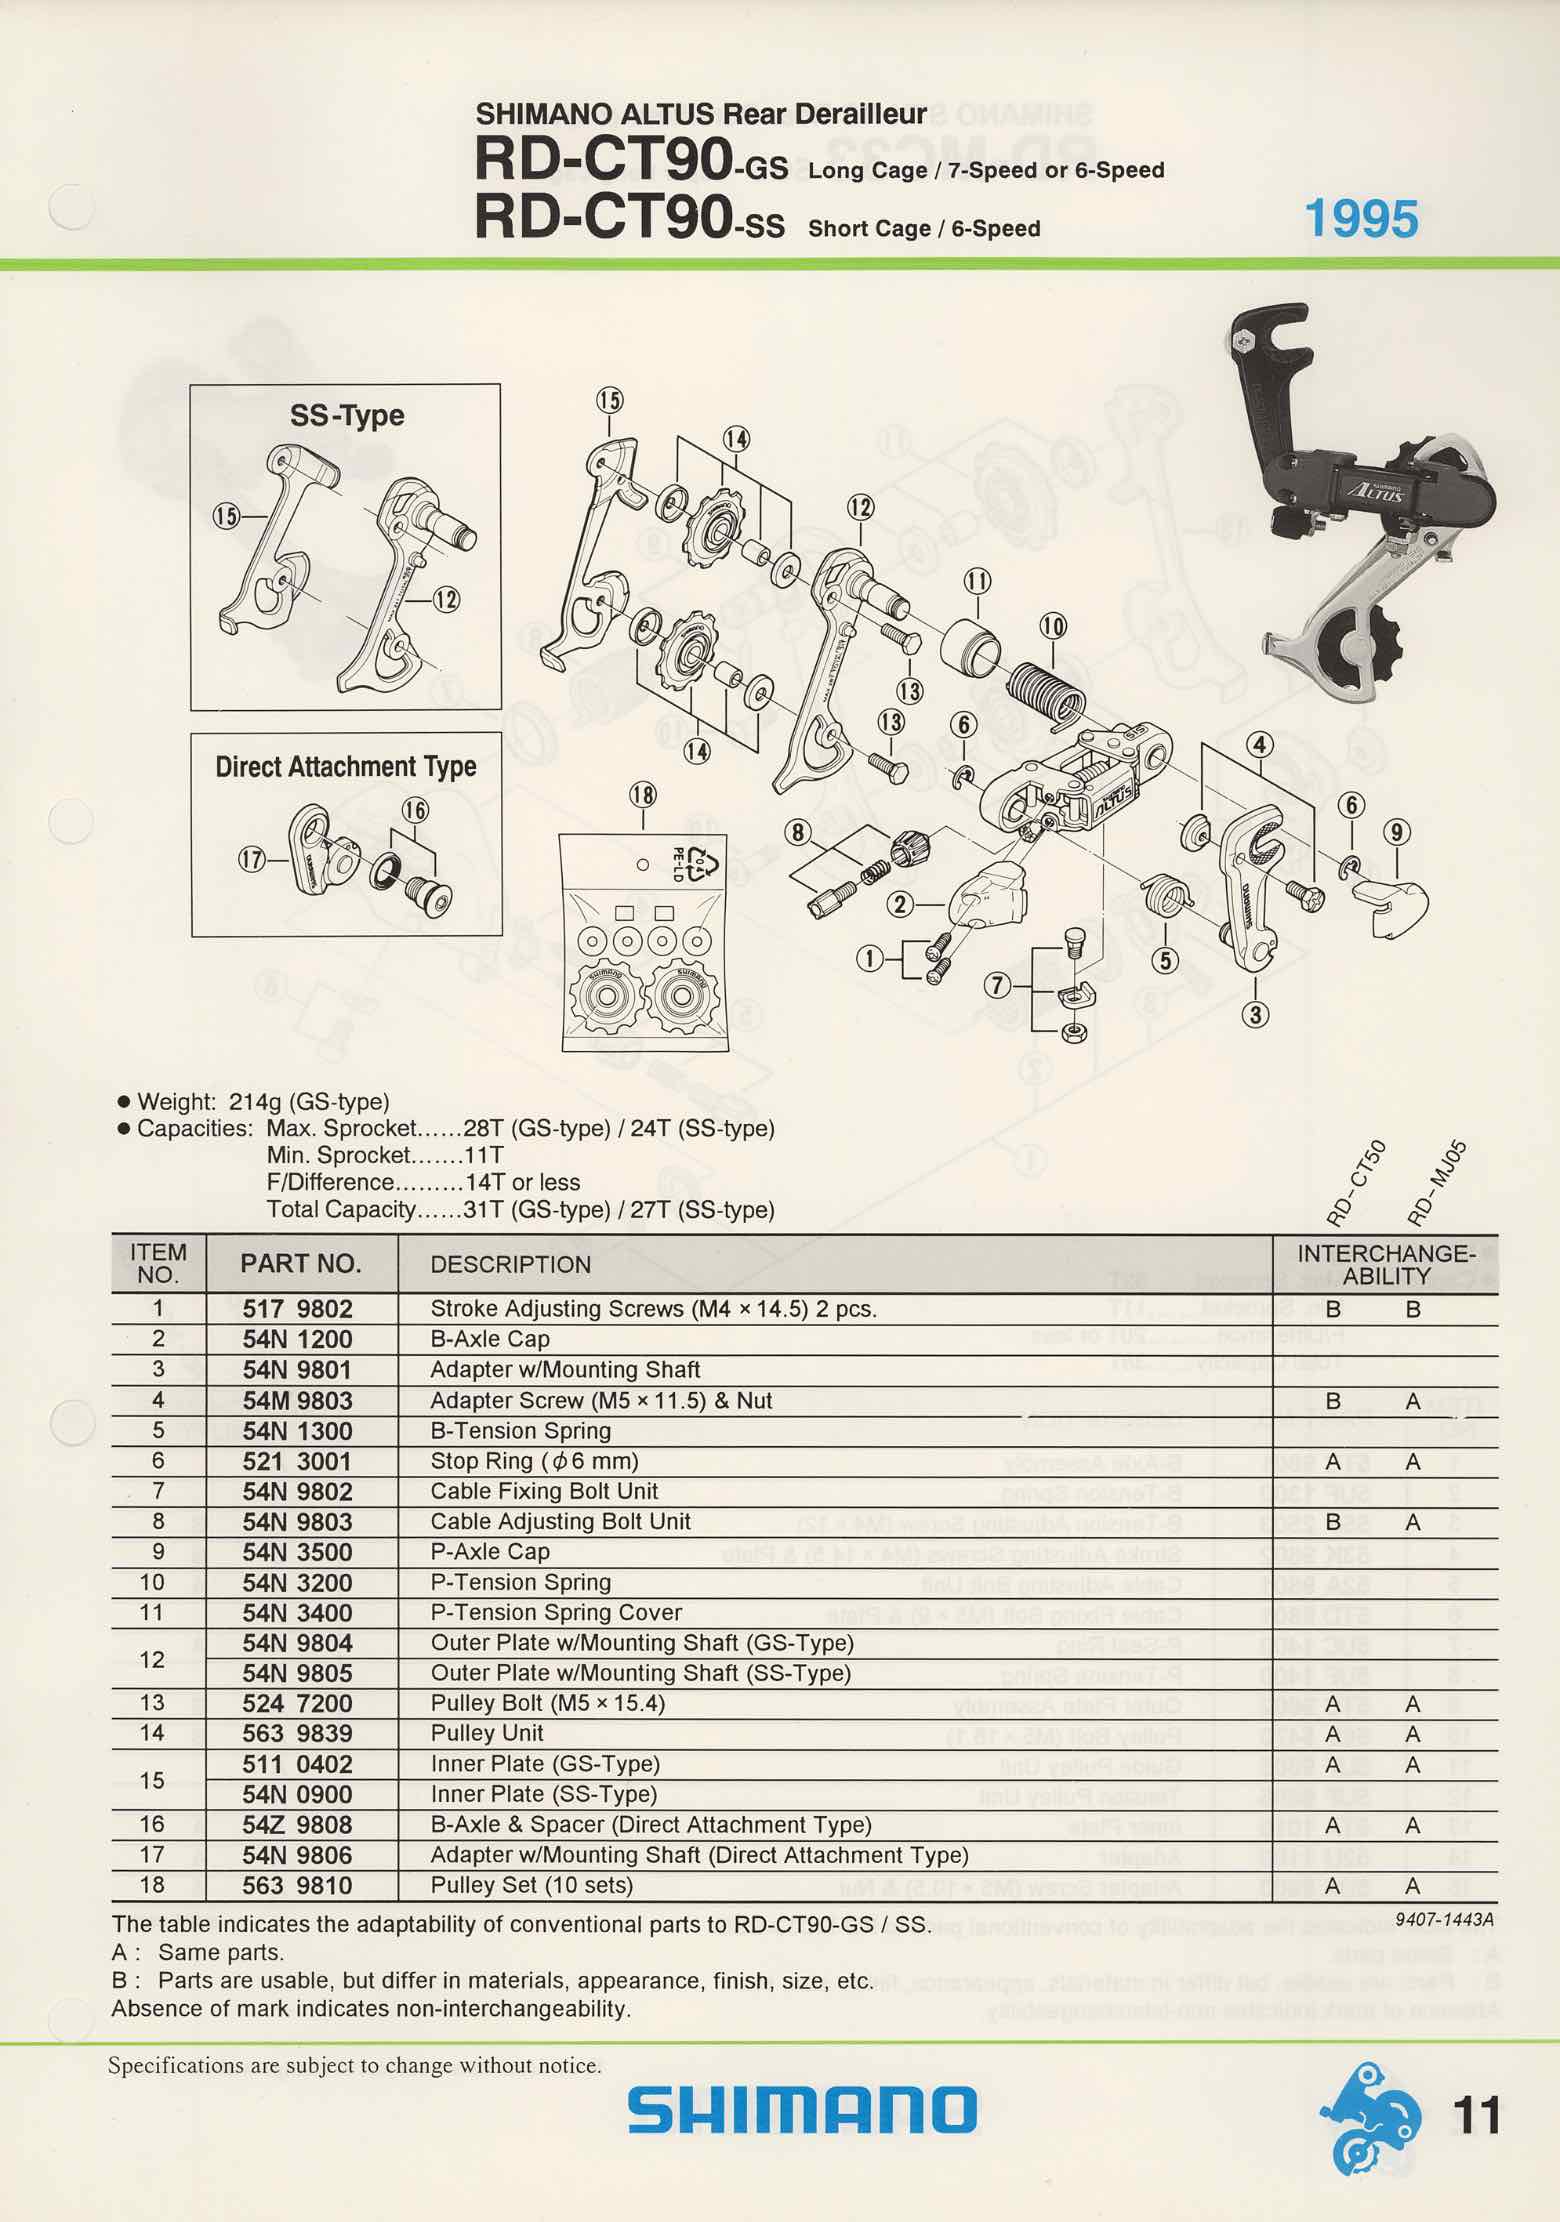 Shimano Spare Parts Catalogue - 1994 to 2004 s5 p11 main image